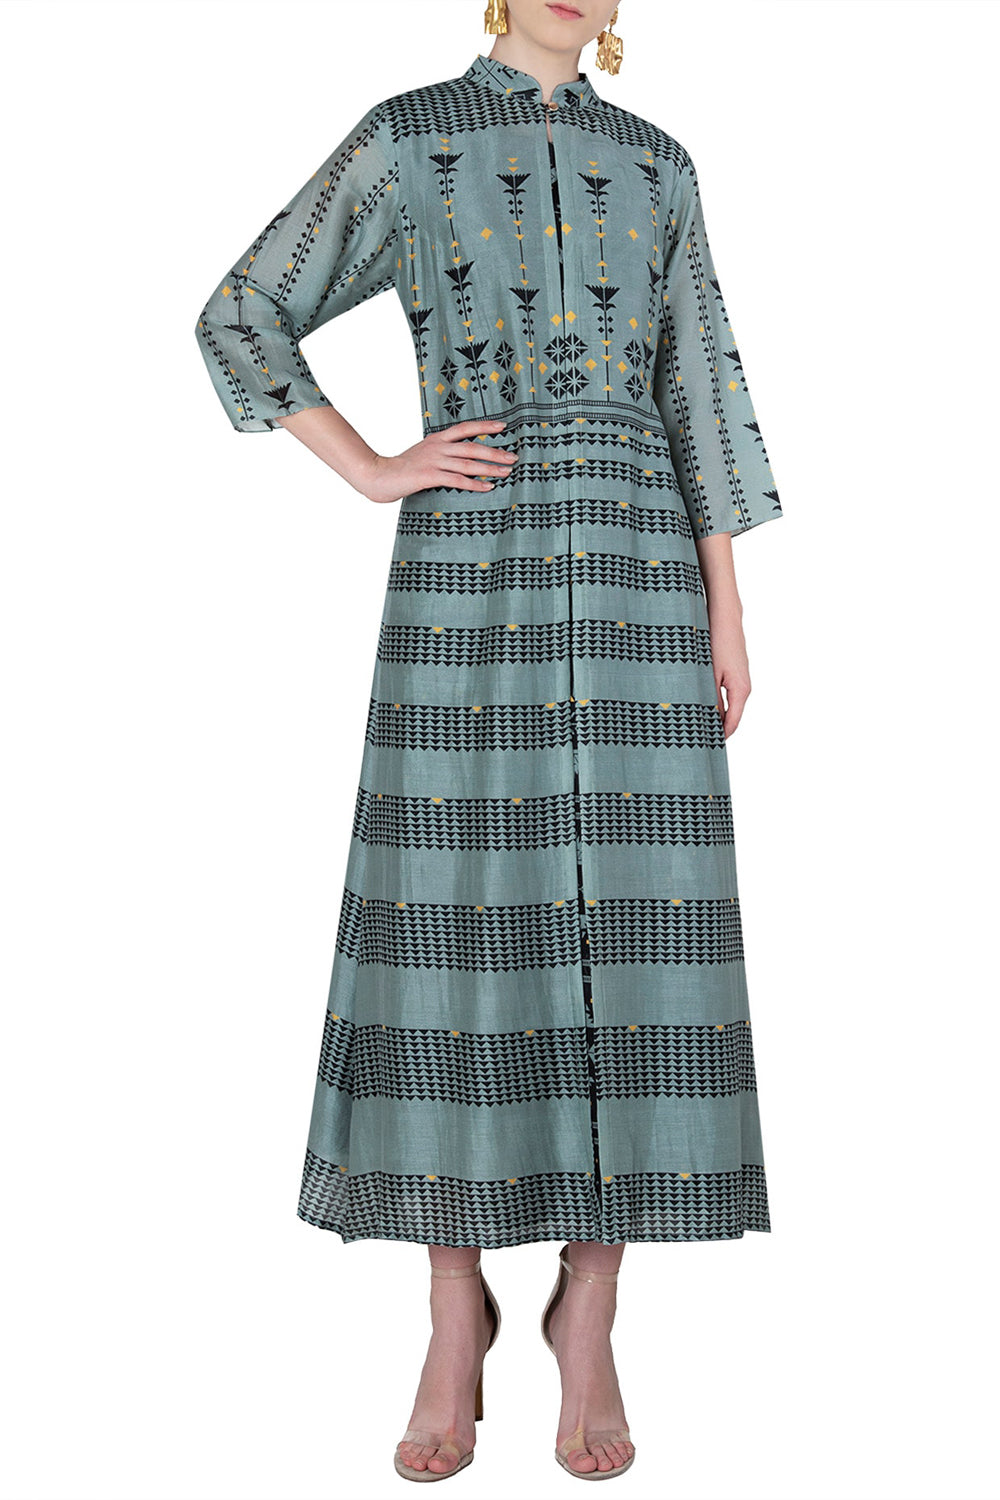 Azulejos Printed Dress With Jacket